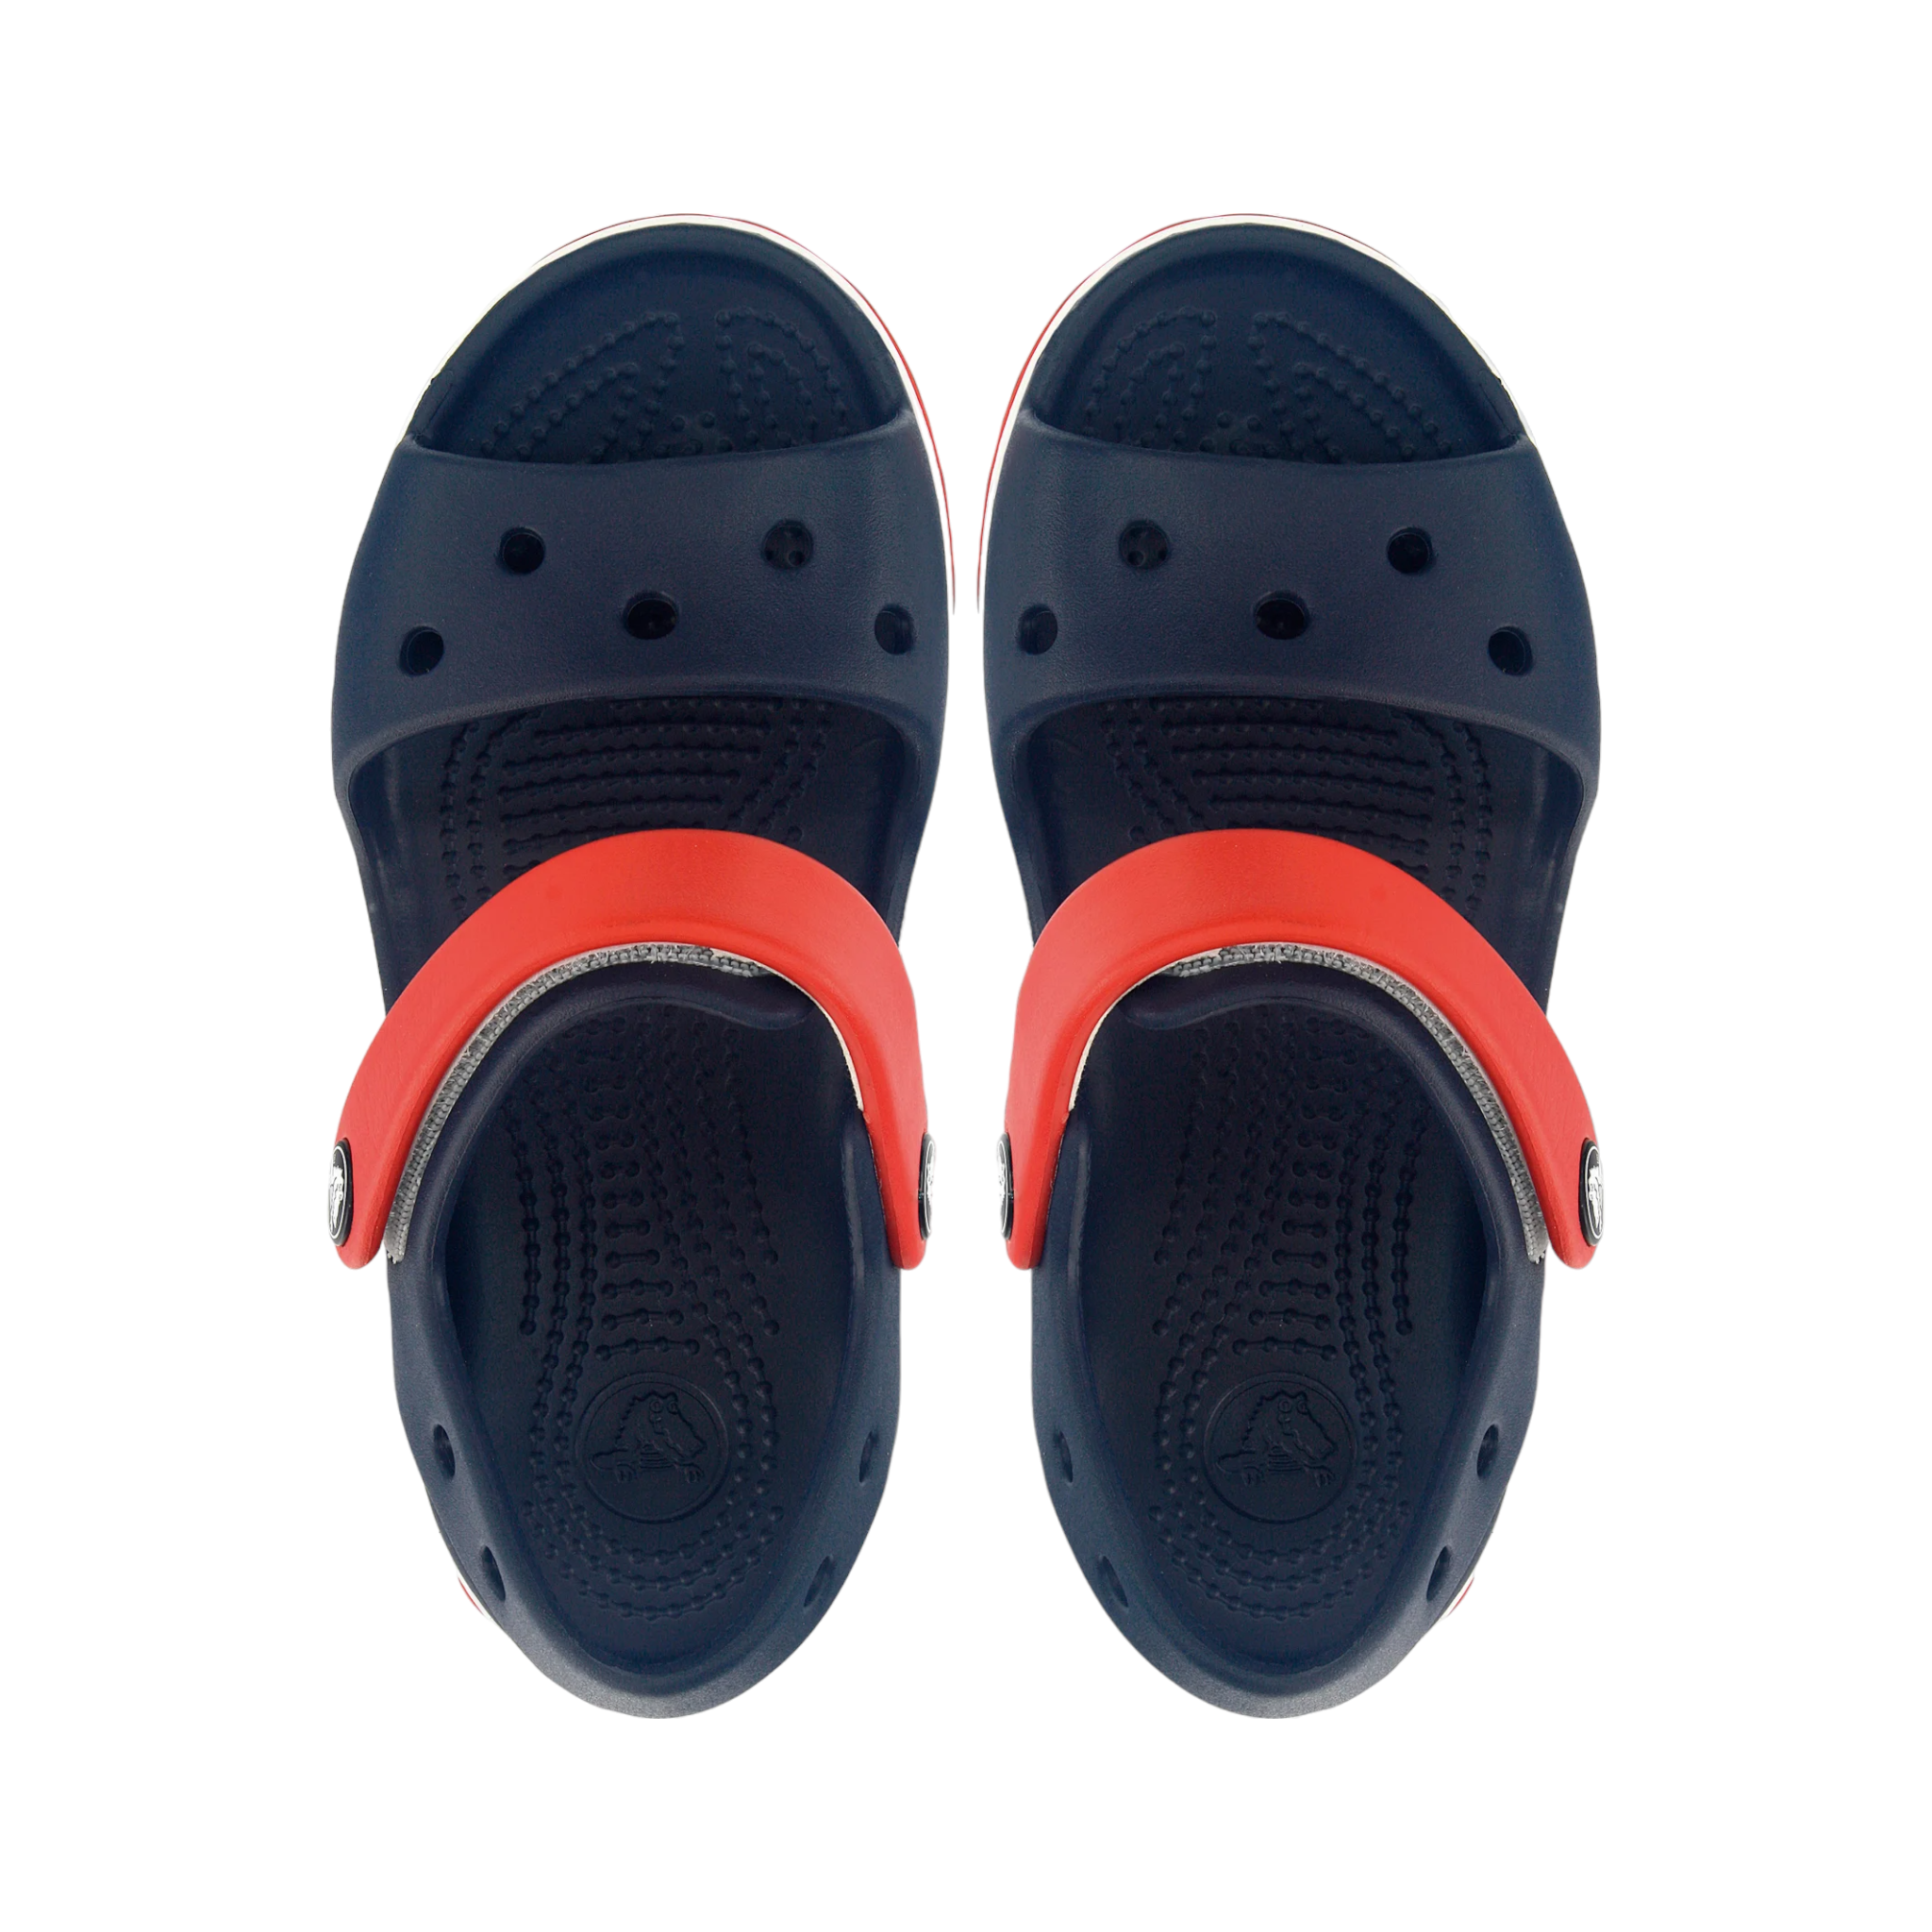 Crocband Sandal Kids - shoe&amp;me - Crocs - Crocs - Kids, Sandals